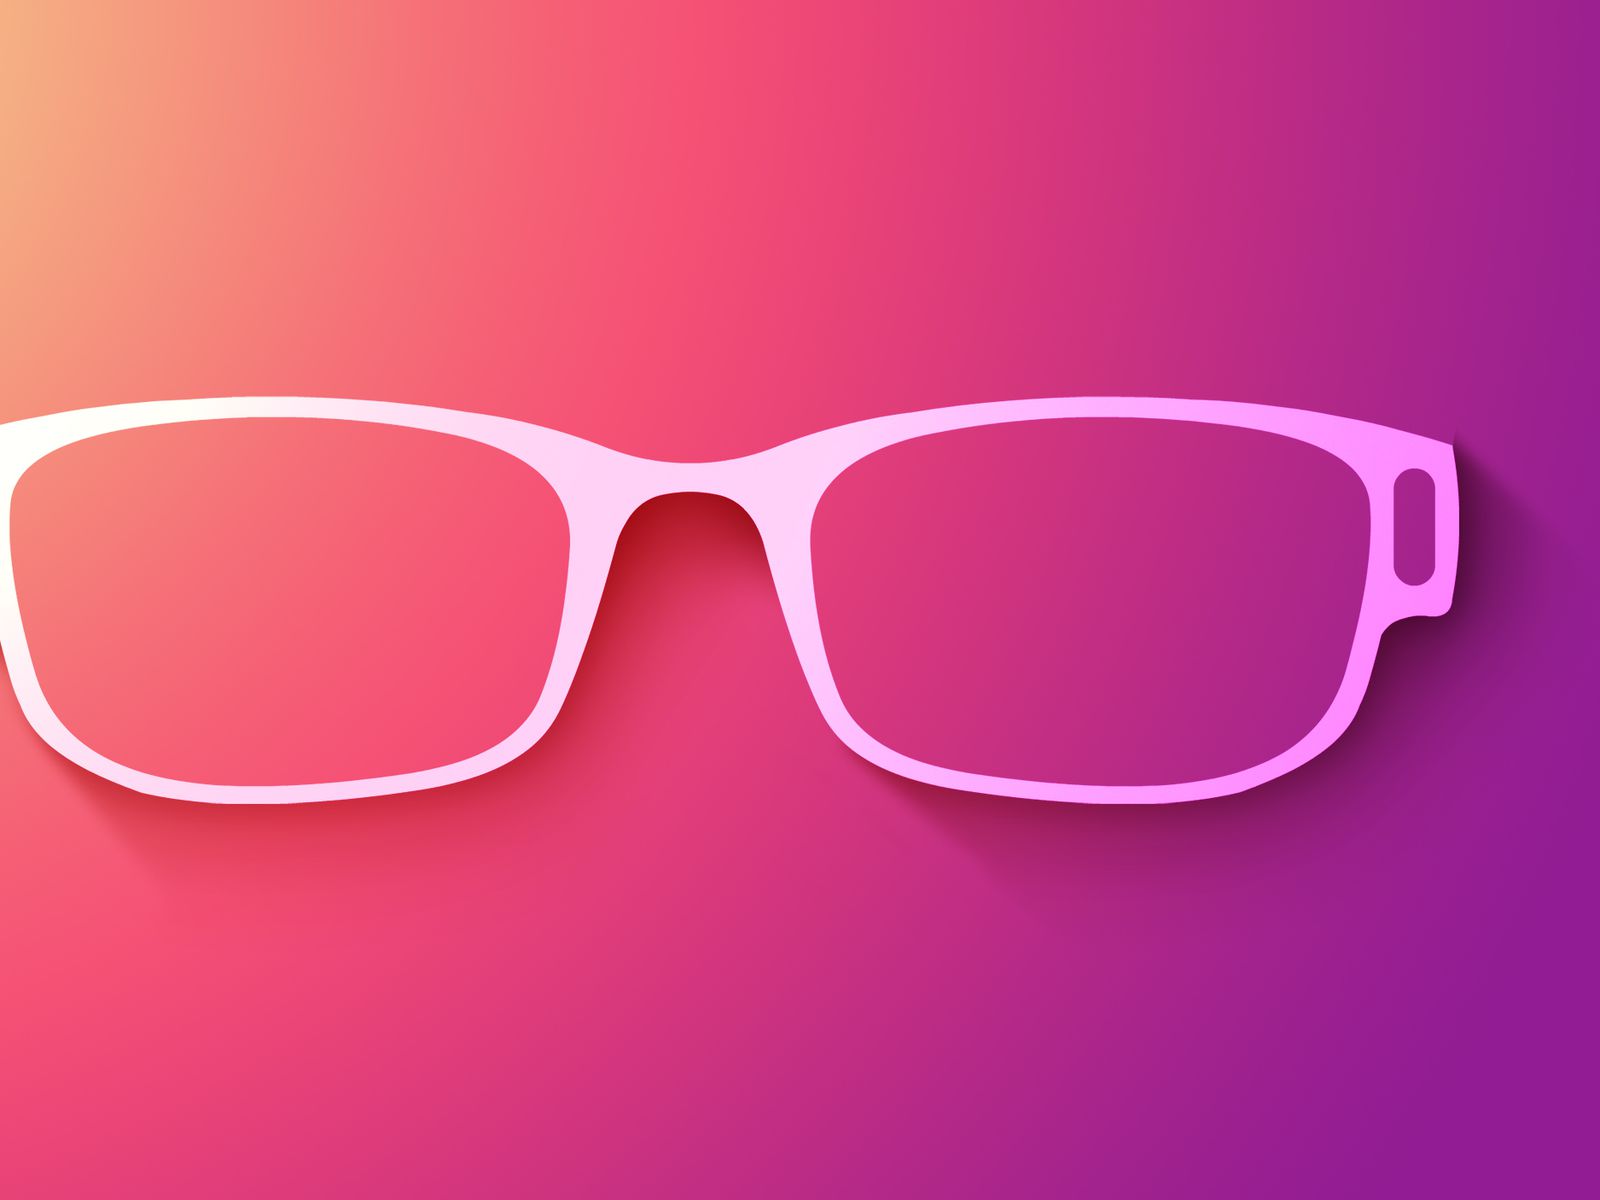 https://images.macrumors.com/t/YlMyyp2lPJO2e3MCYRs5Fz-EFNg=/1600x1200/smart/article-new/2021/01/Apple-Glasses-Triad-Feature.jpg